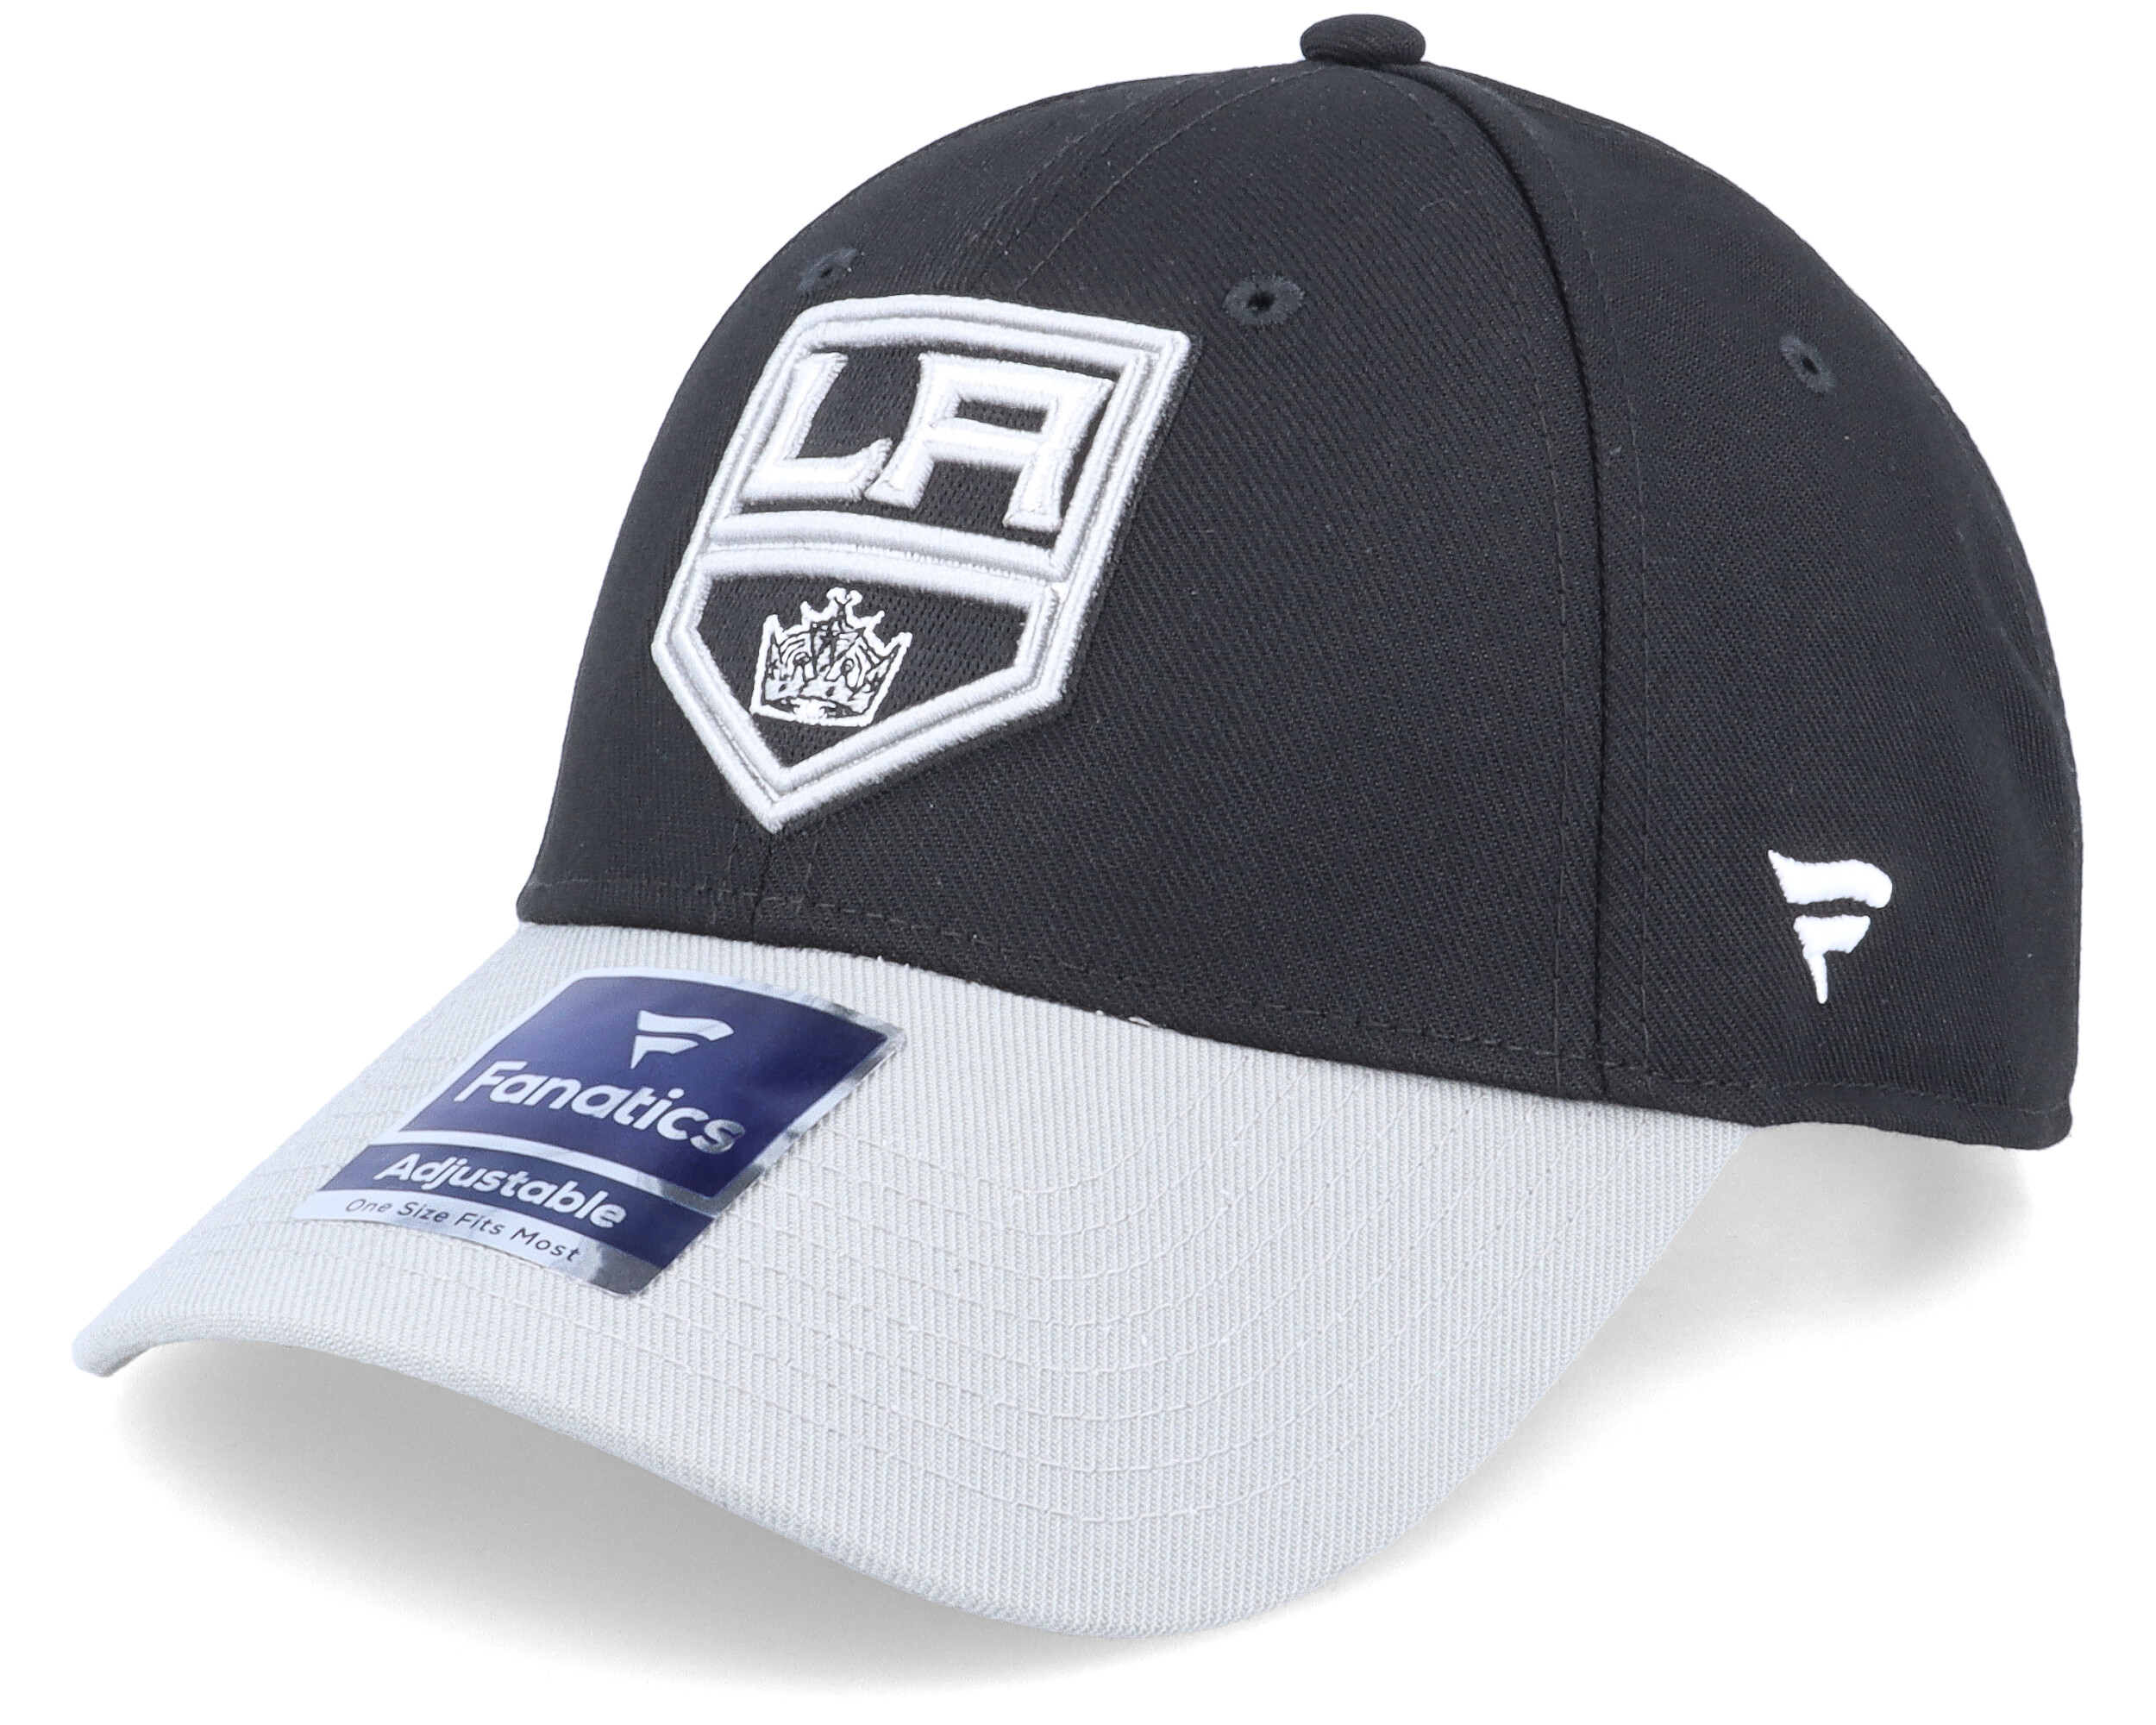 New Fanatics Adjustable SnapBack LA Kings Hat